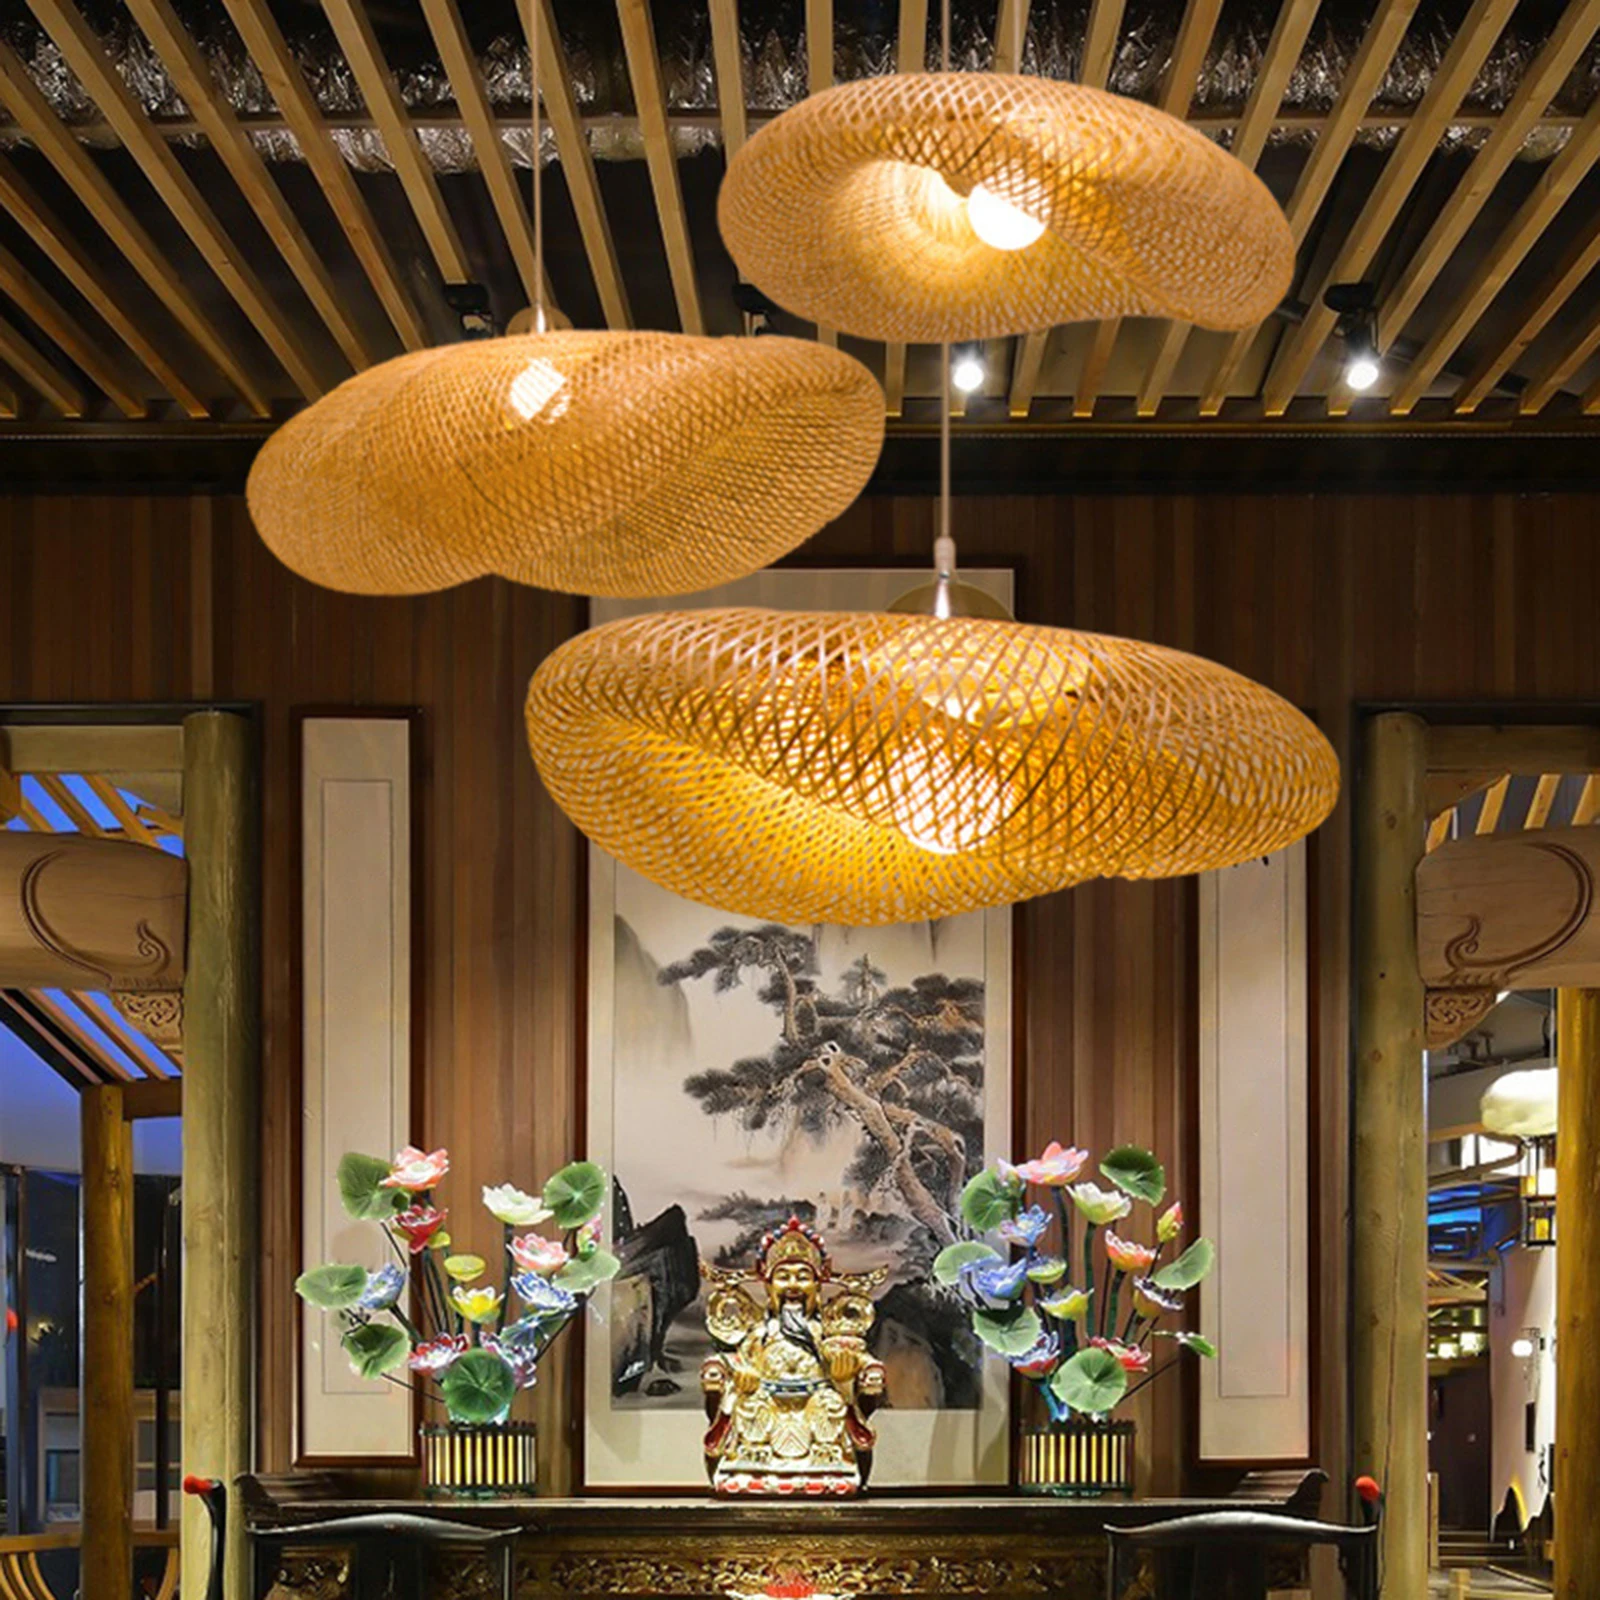 Creative Retro Bamboo Weaving Chandelier Pendant Light Lamp Hanging LED Droplight for Cafe Bar Living Room Bedroom Decoration